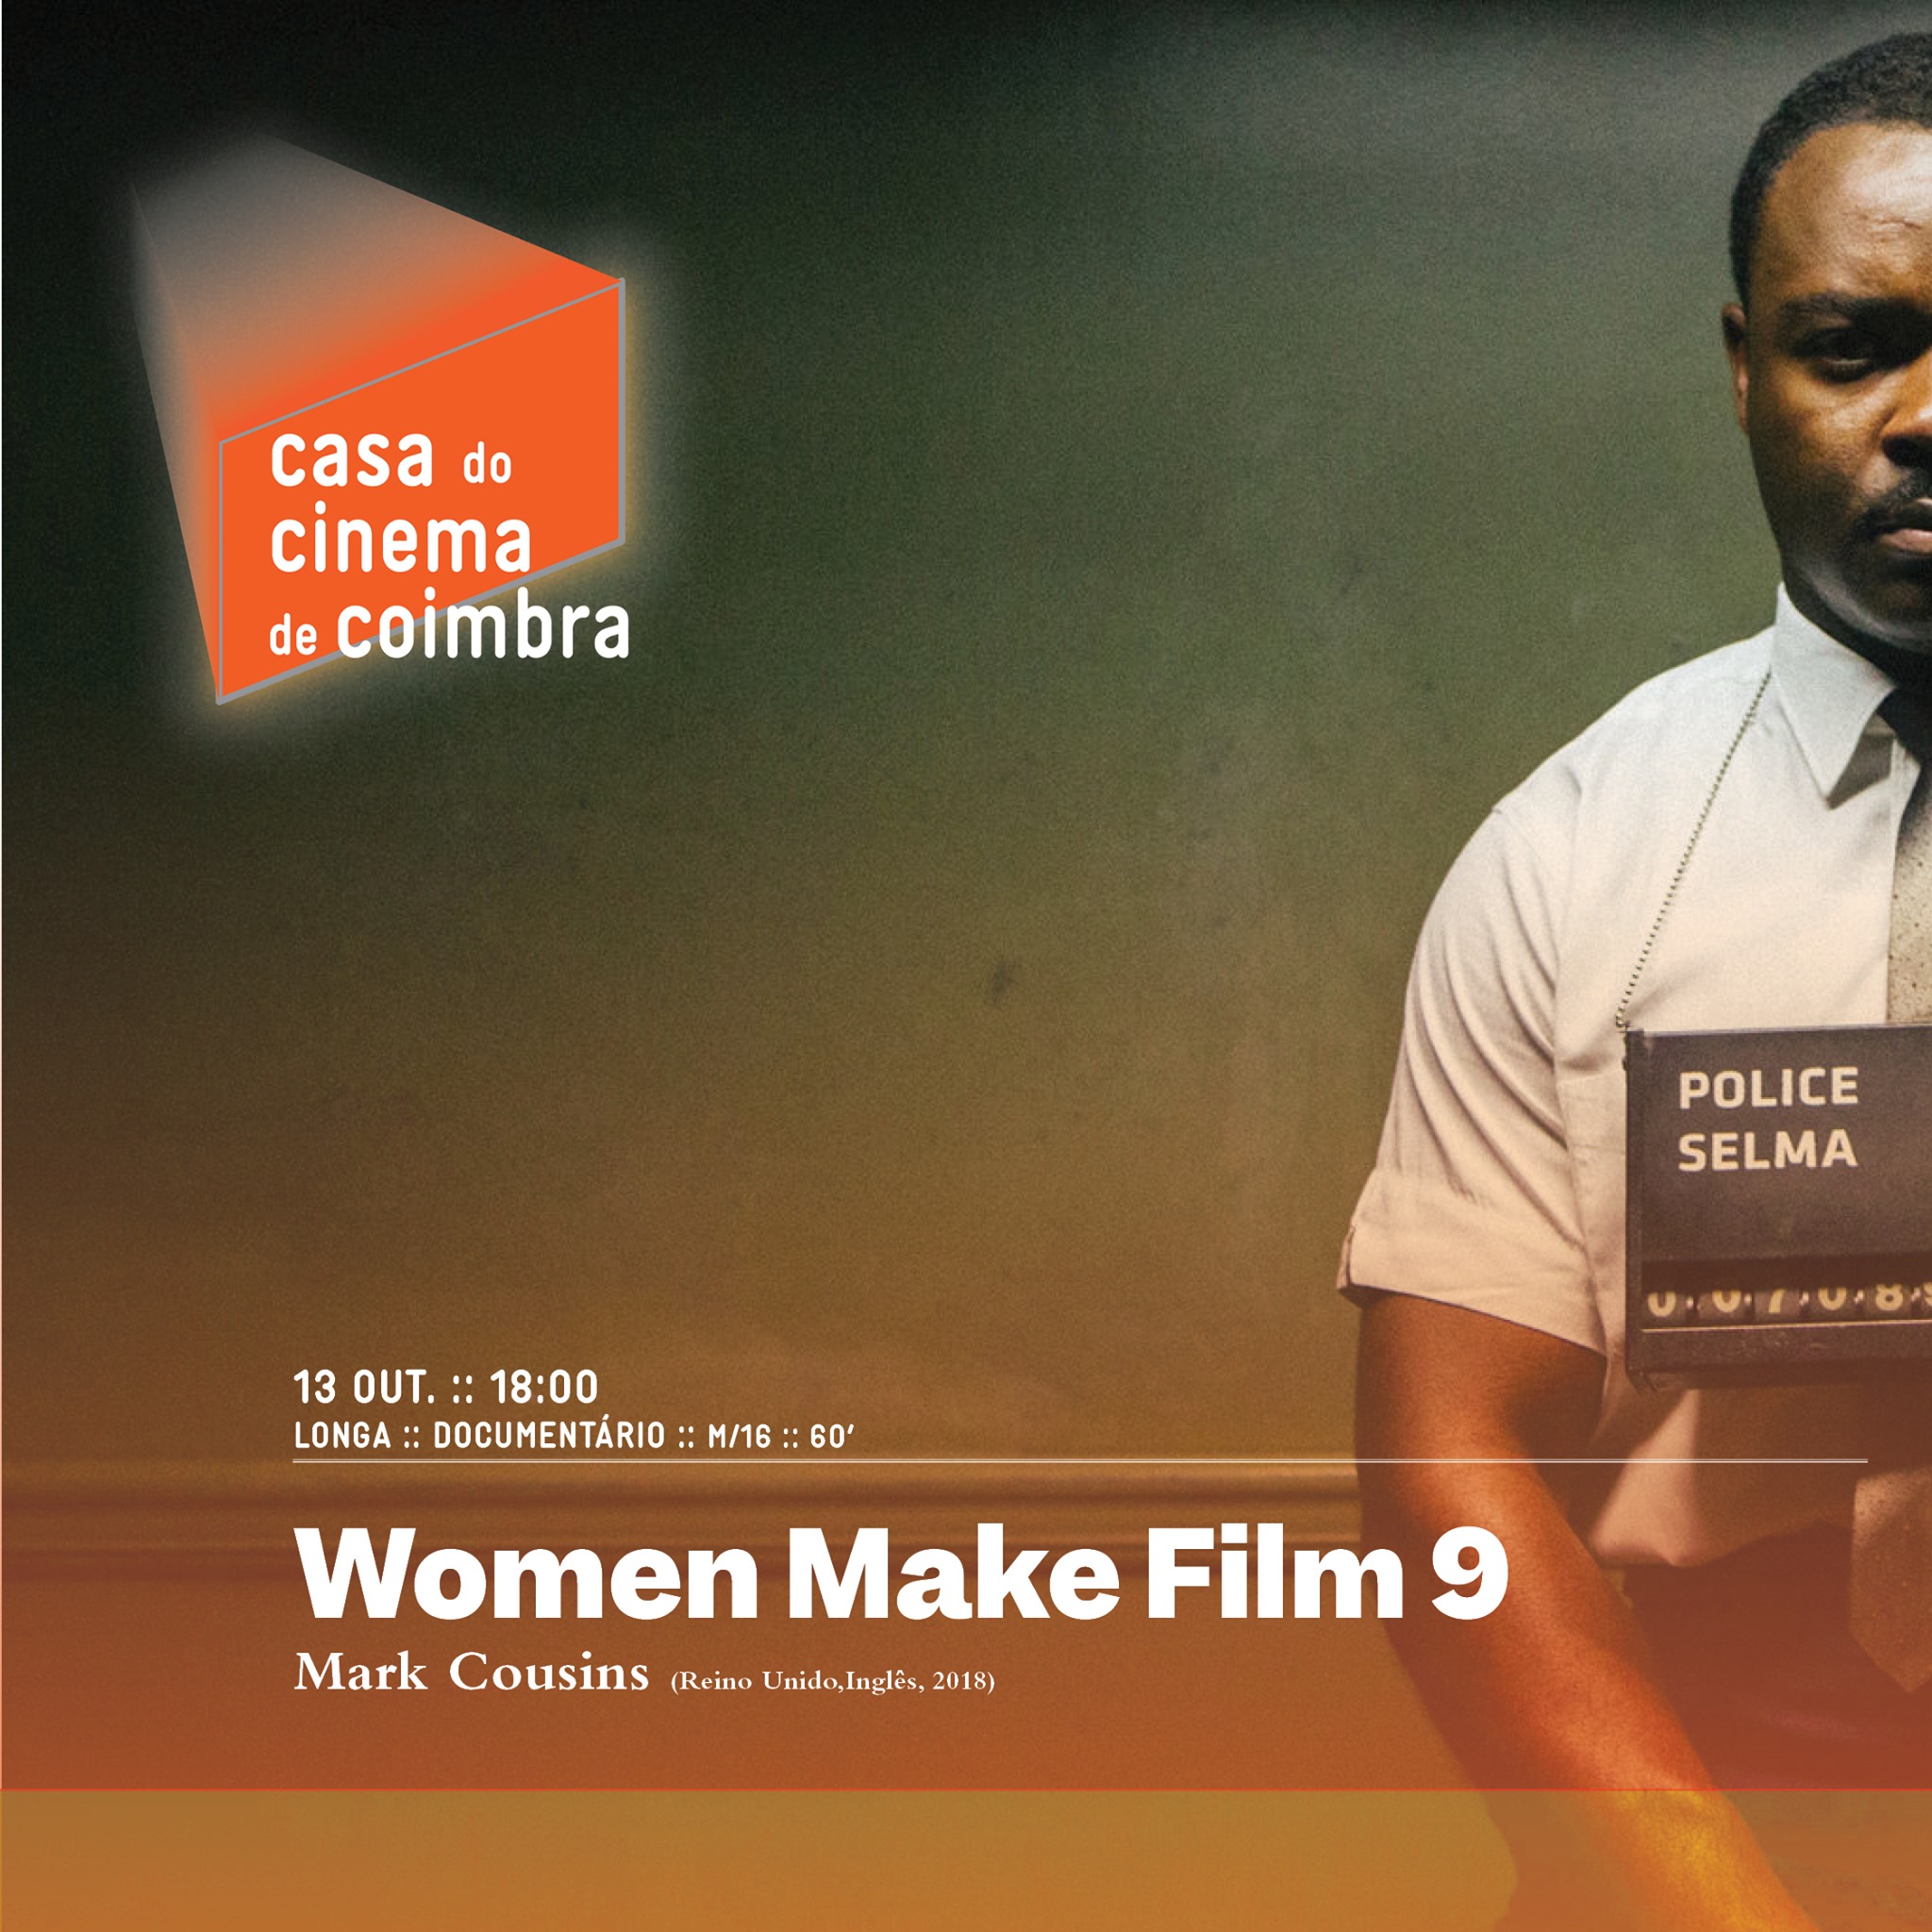 WOMEN MAKE FILM 9